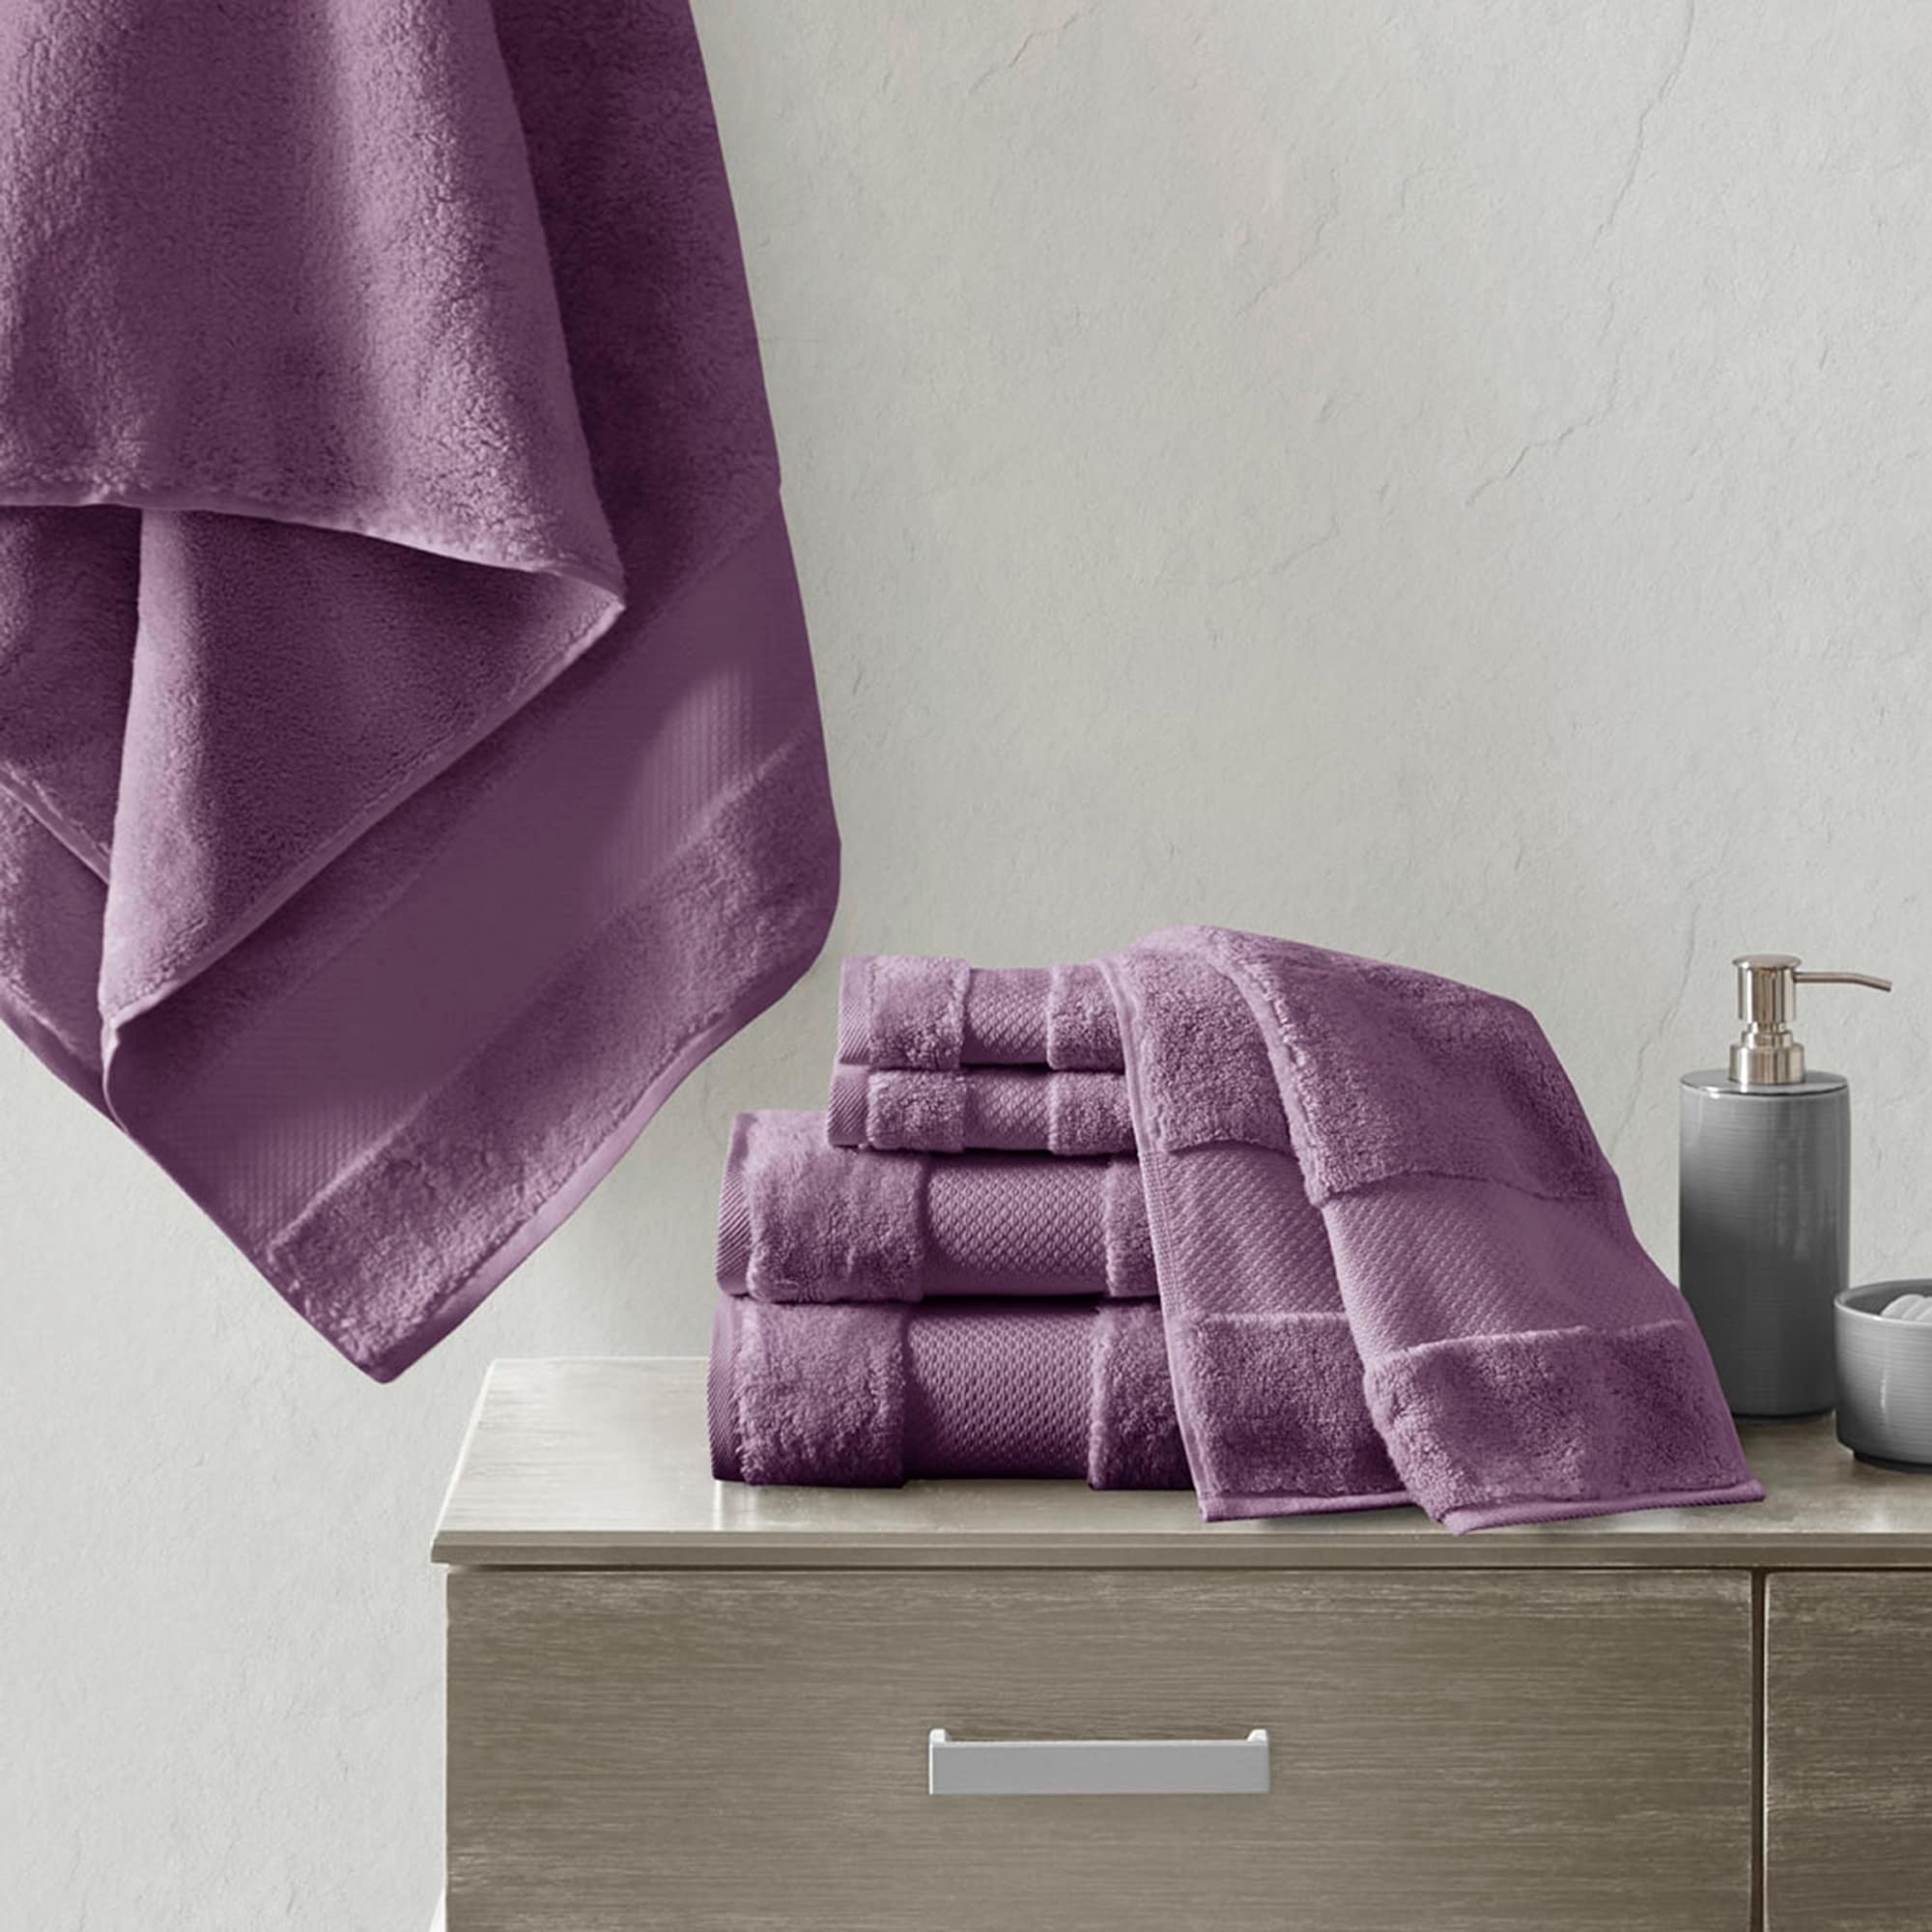 https://ak1.ostkcdn.com/images/products/is/images/direct/0da15a5a0c71eb20f8a44b25fa5ae4288be74e21/Madison-Park-Signature-Turkish-Cotton-6-Piece-Bath-Towel-Set.jpg